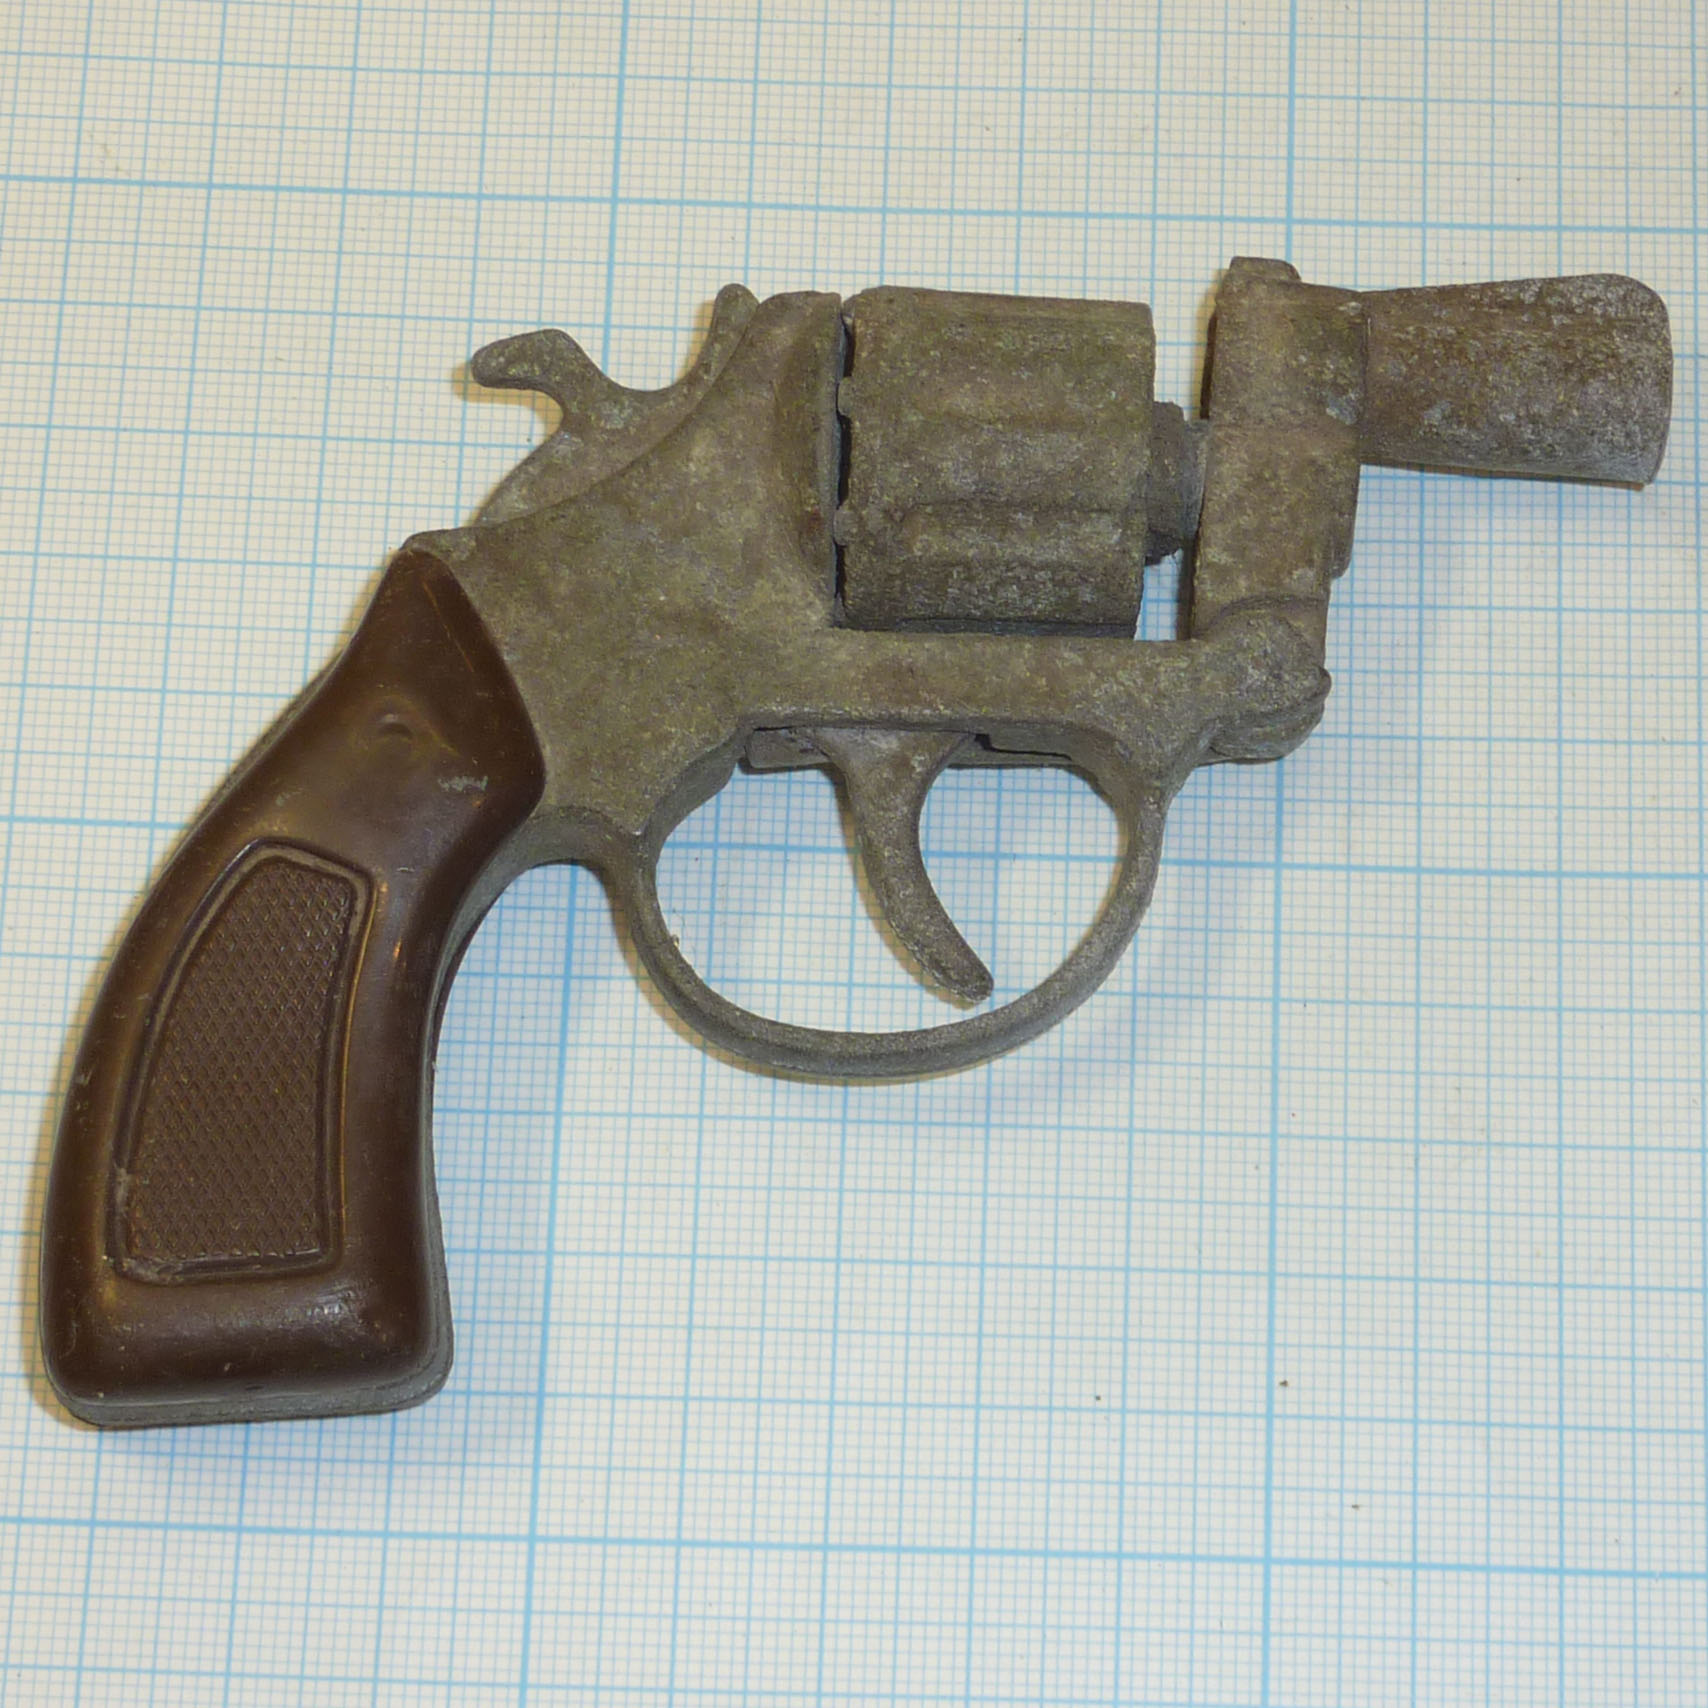 Toy revolver rust фото 38